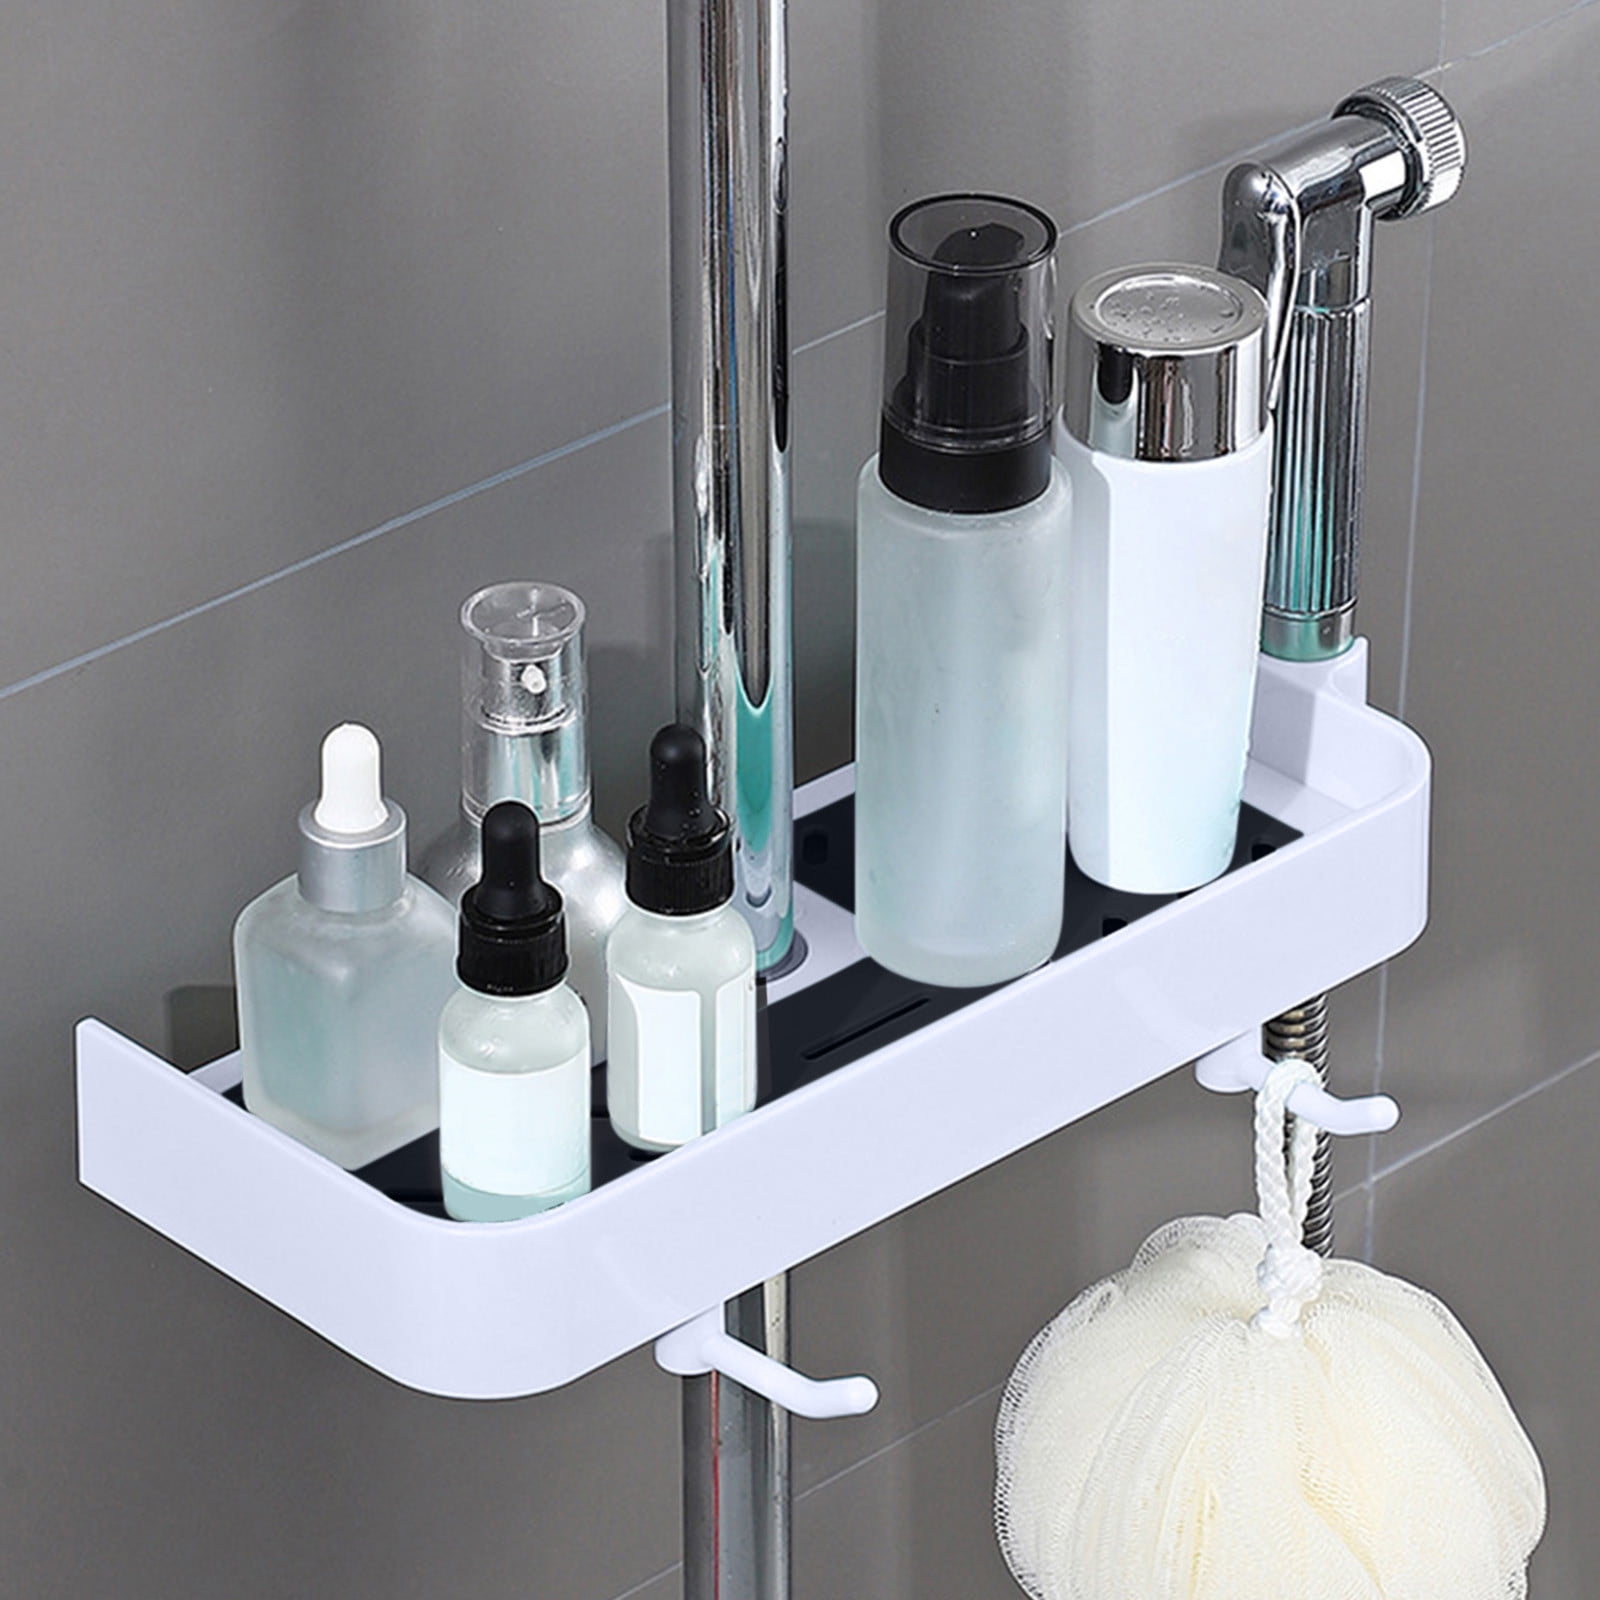 Luxury Punch-free Bathroom Shelves RustProof Aluminum Shower Caddy